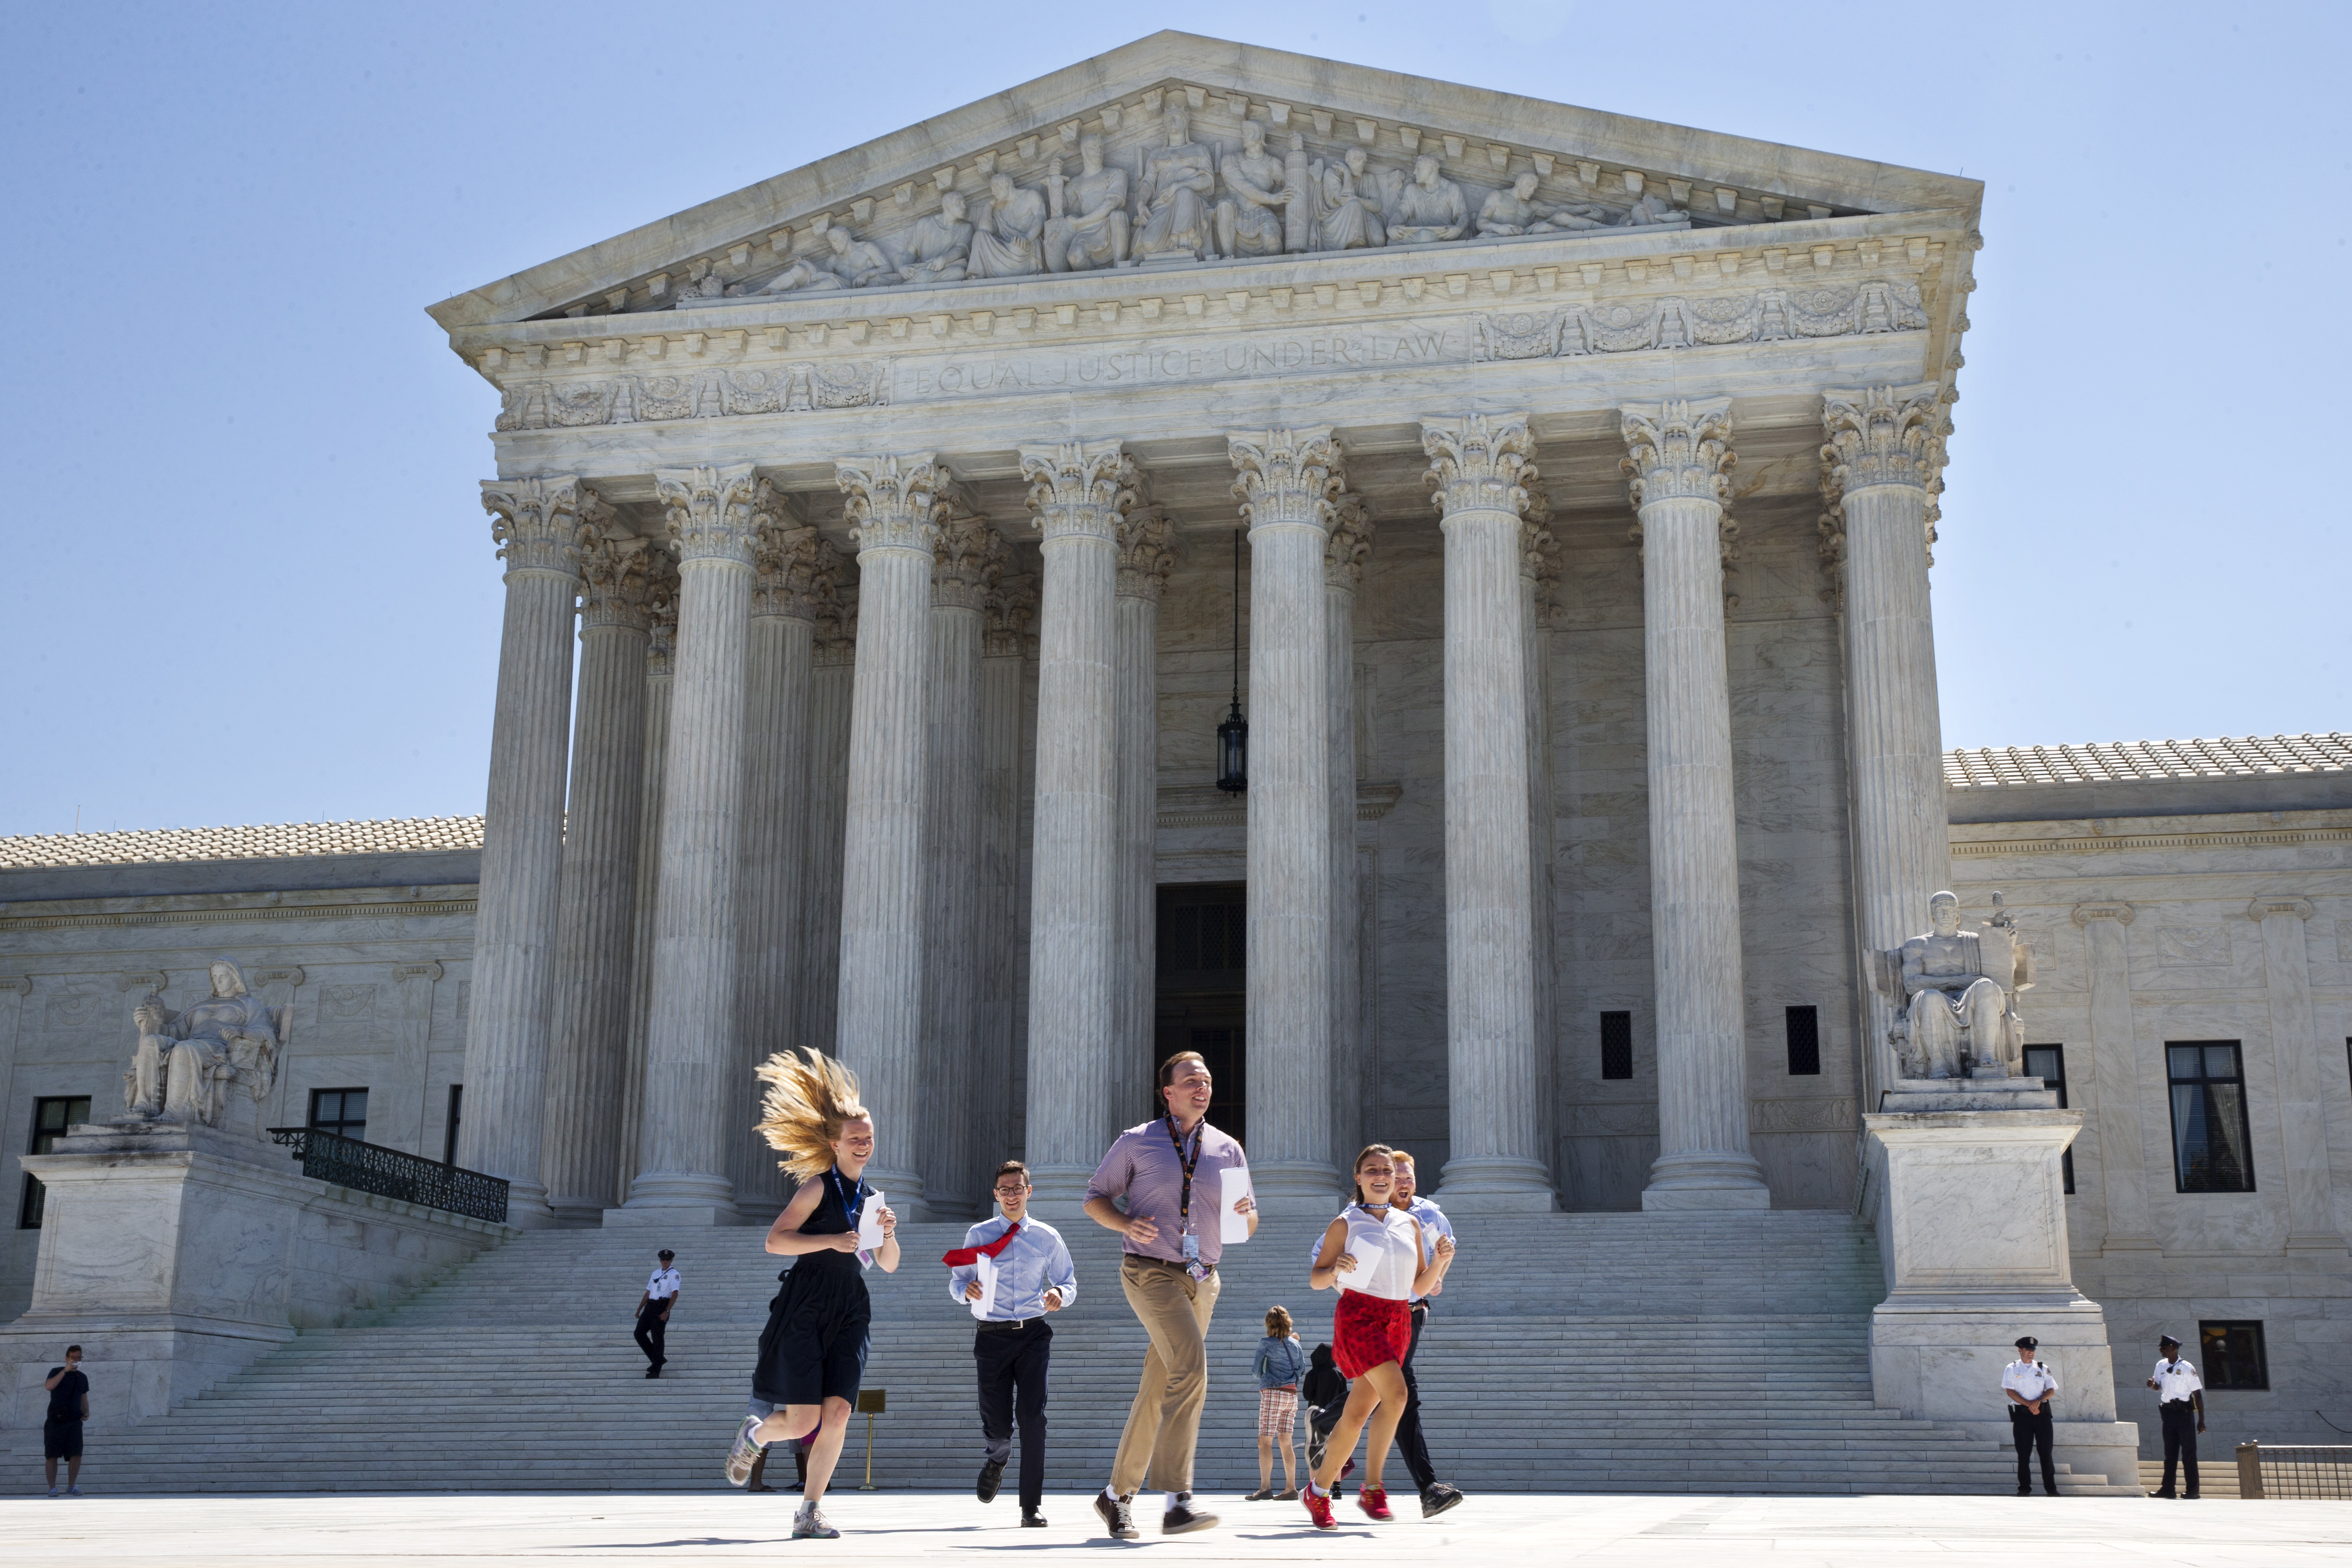 Interns run to deliver a Supreme Court decisions.